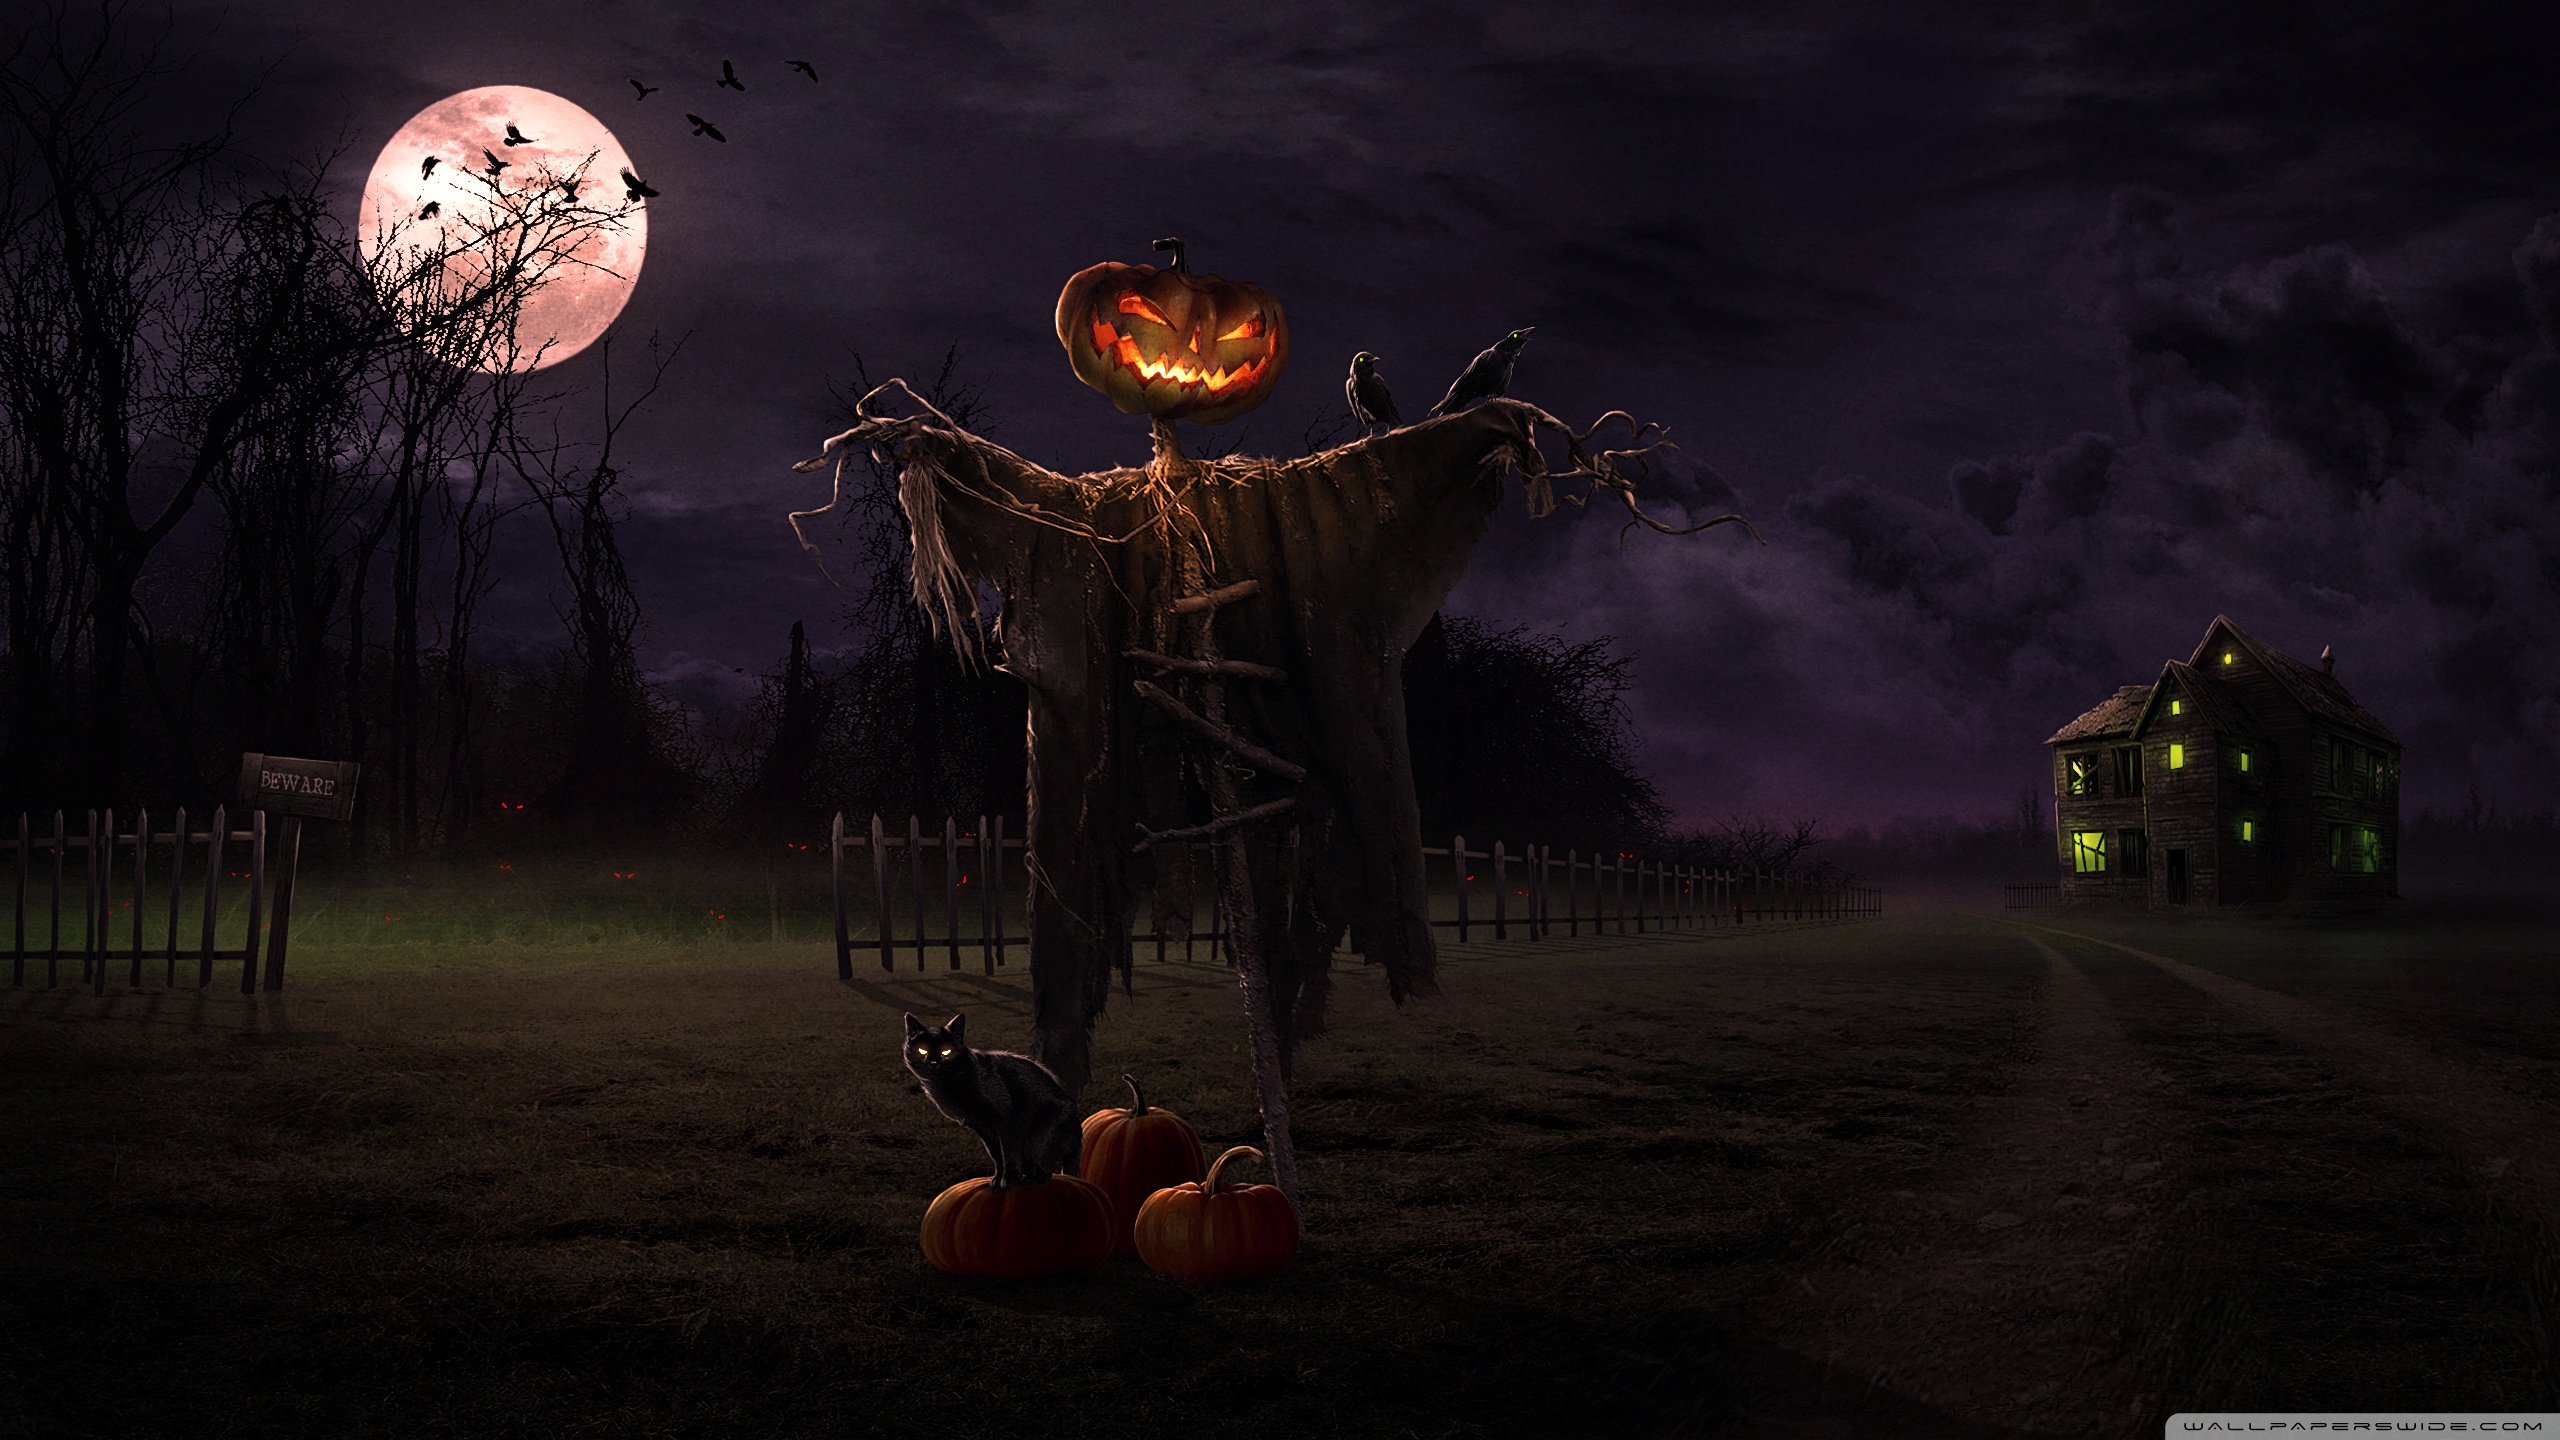 Spooky Halloween Fondos De Pantalla Gratis Para Wides - vrogue.co